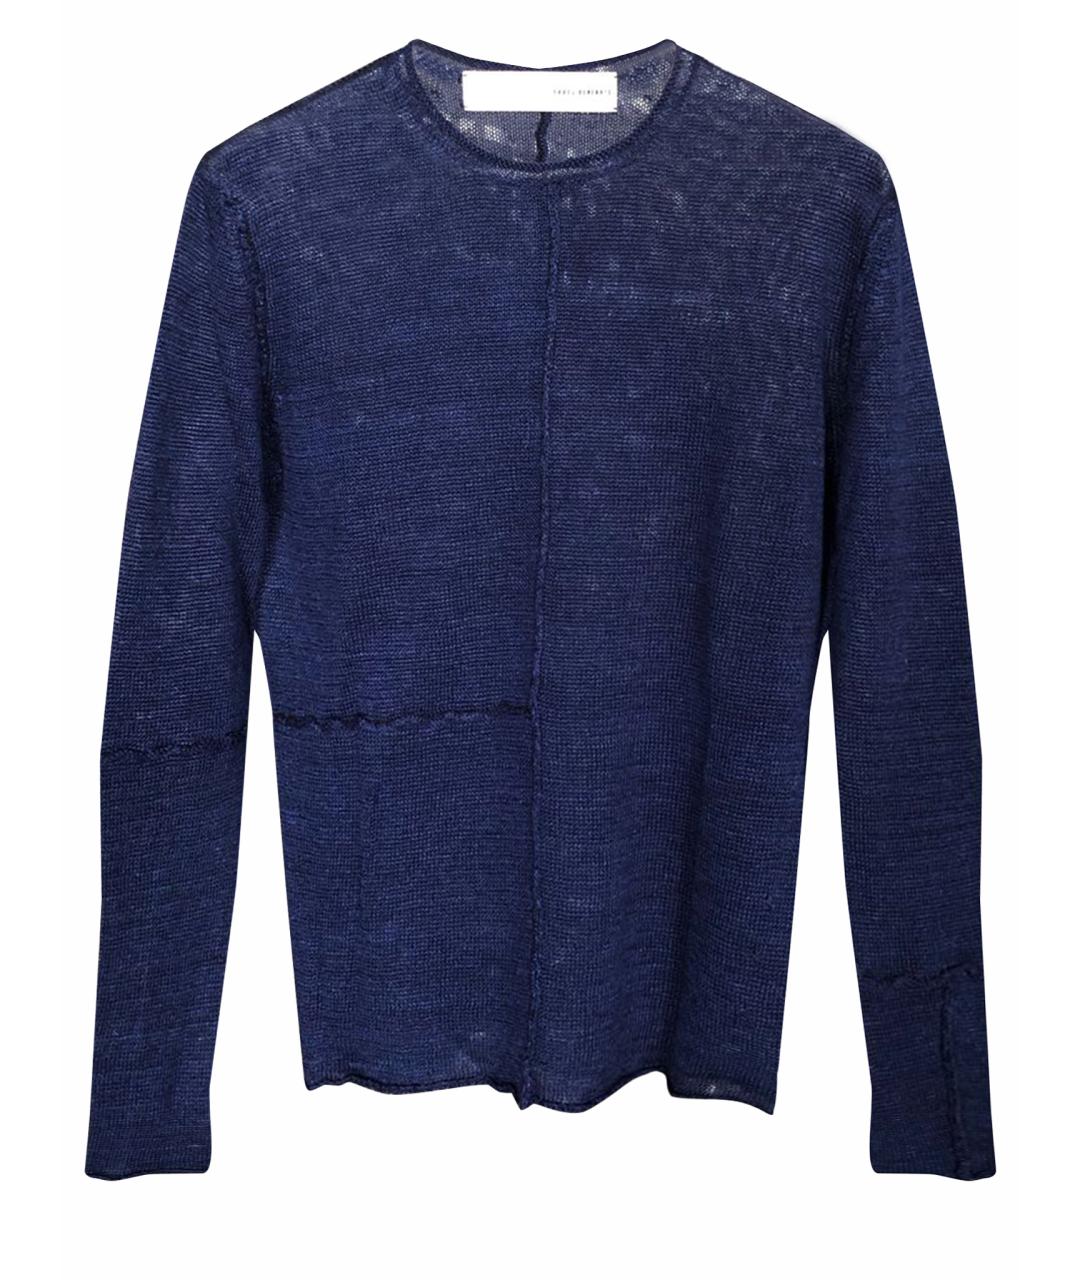 ISABEL BENENATO Темно-синий льняной джемпер / свитер, фото 1